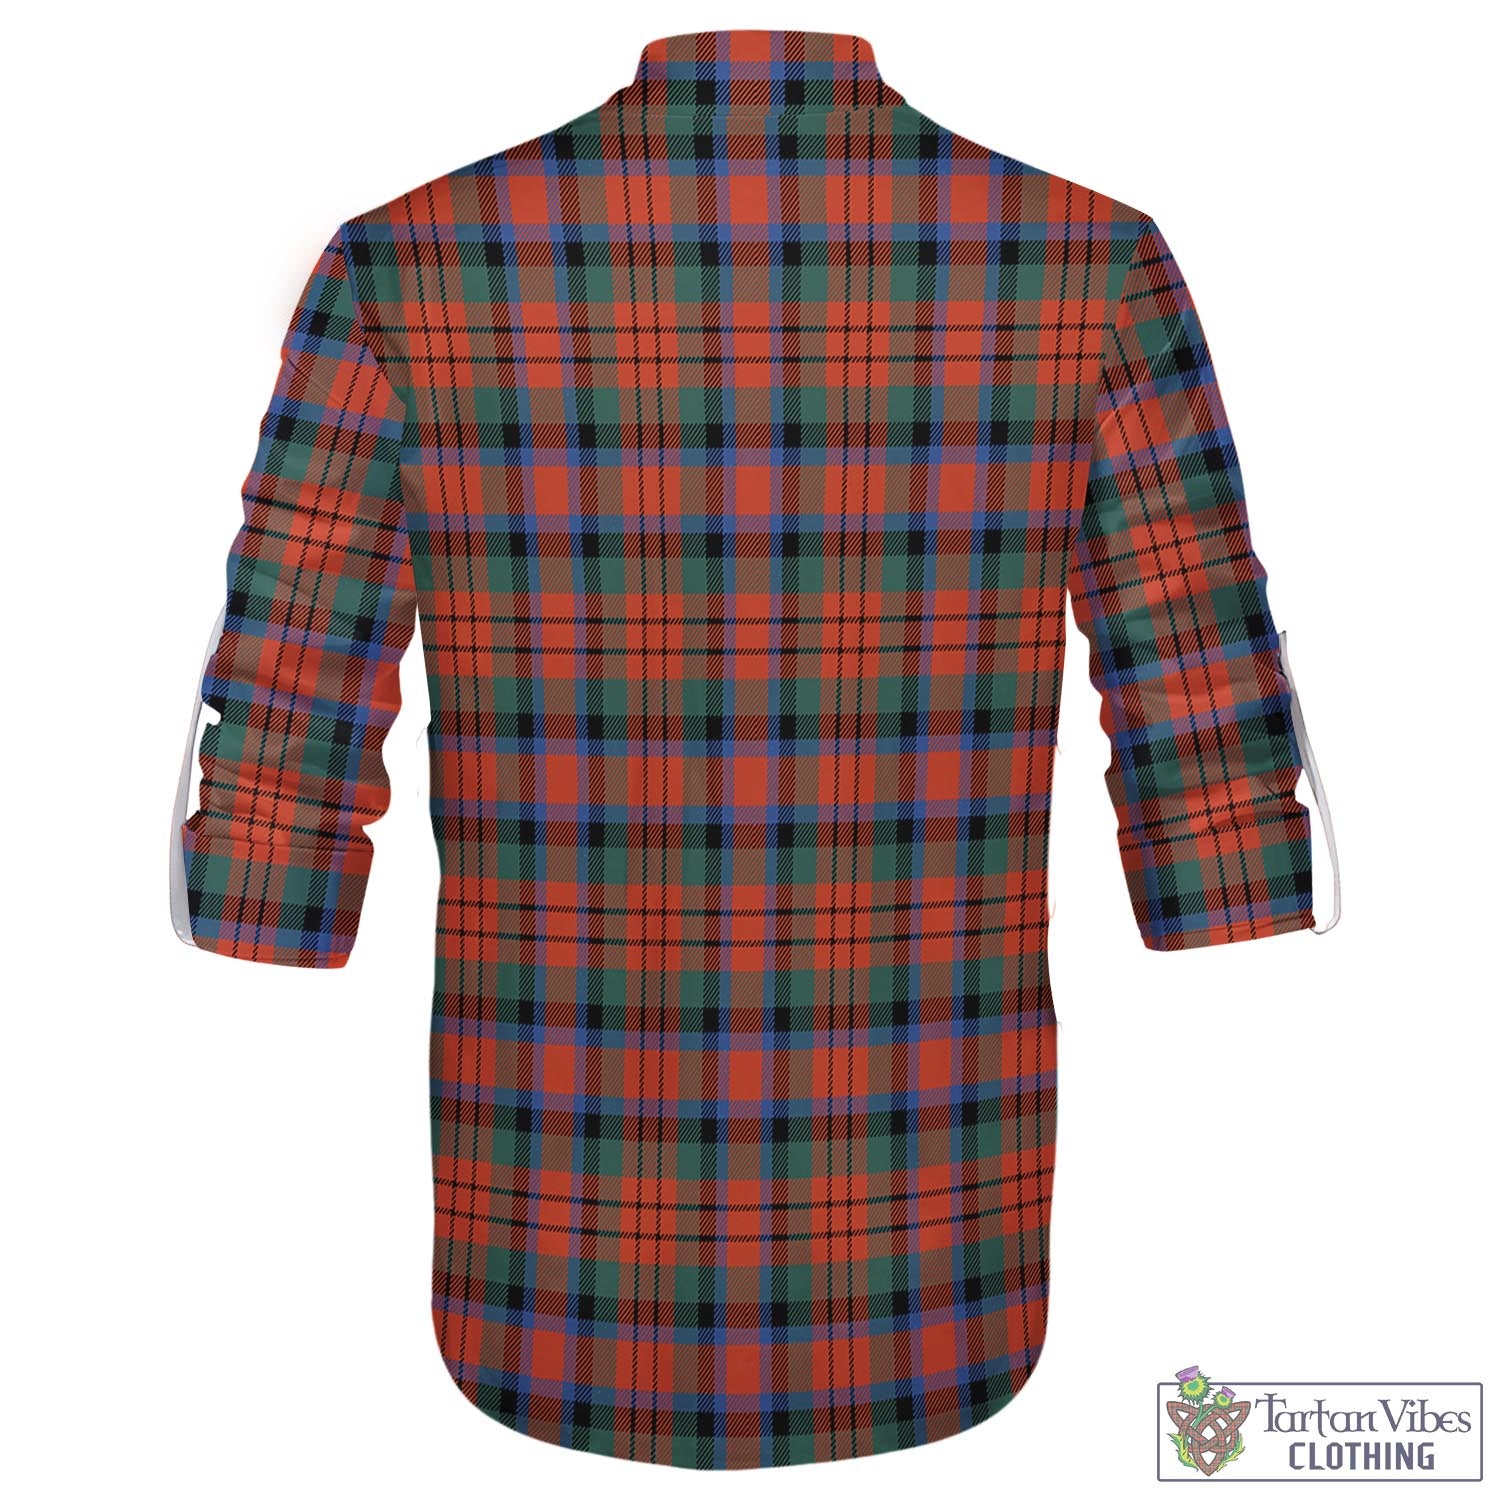 Tartan Vibes Clothing MacDuff Ancient Tartan Men's Scottish Traditional Jacobite Ghillie Kilt Shirt with Family Crest